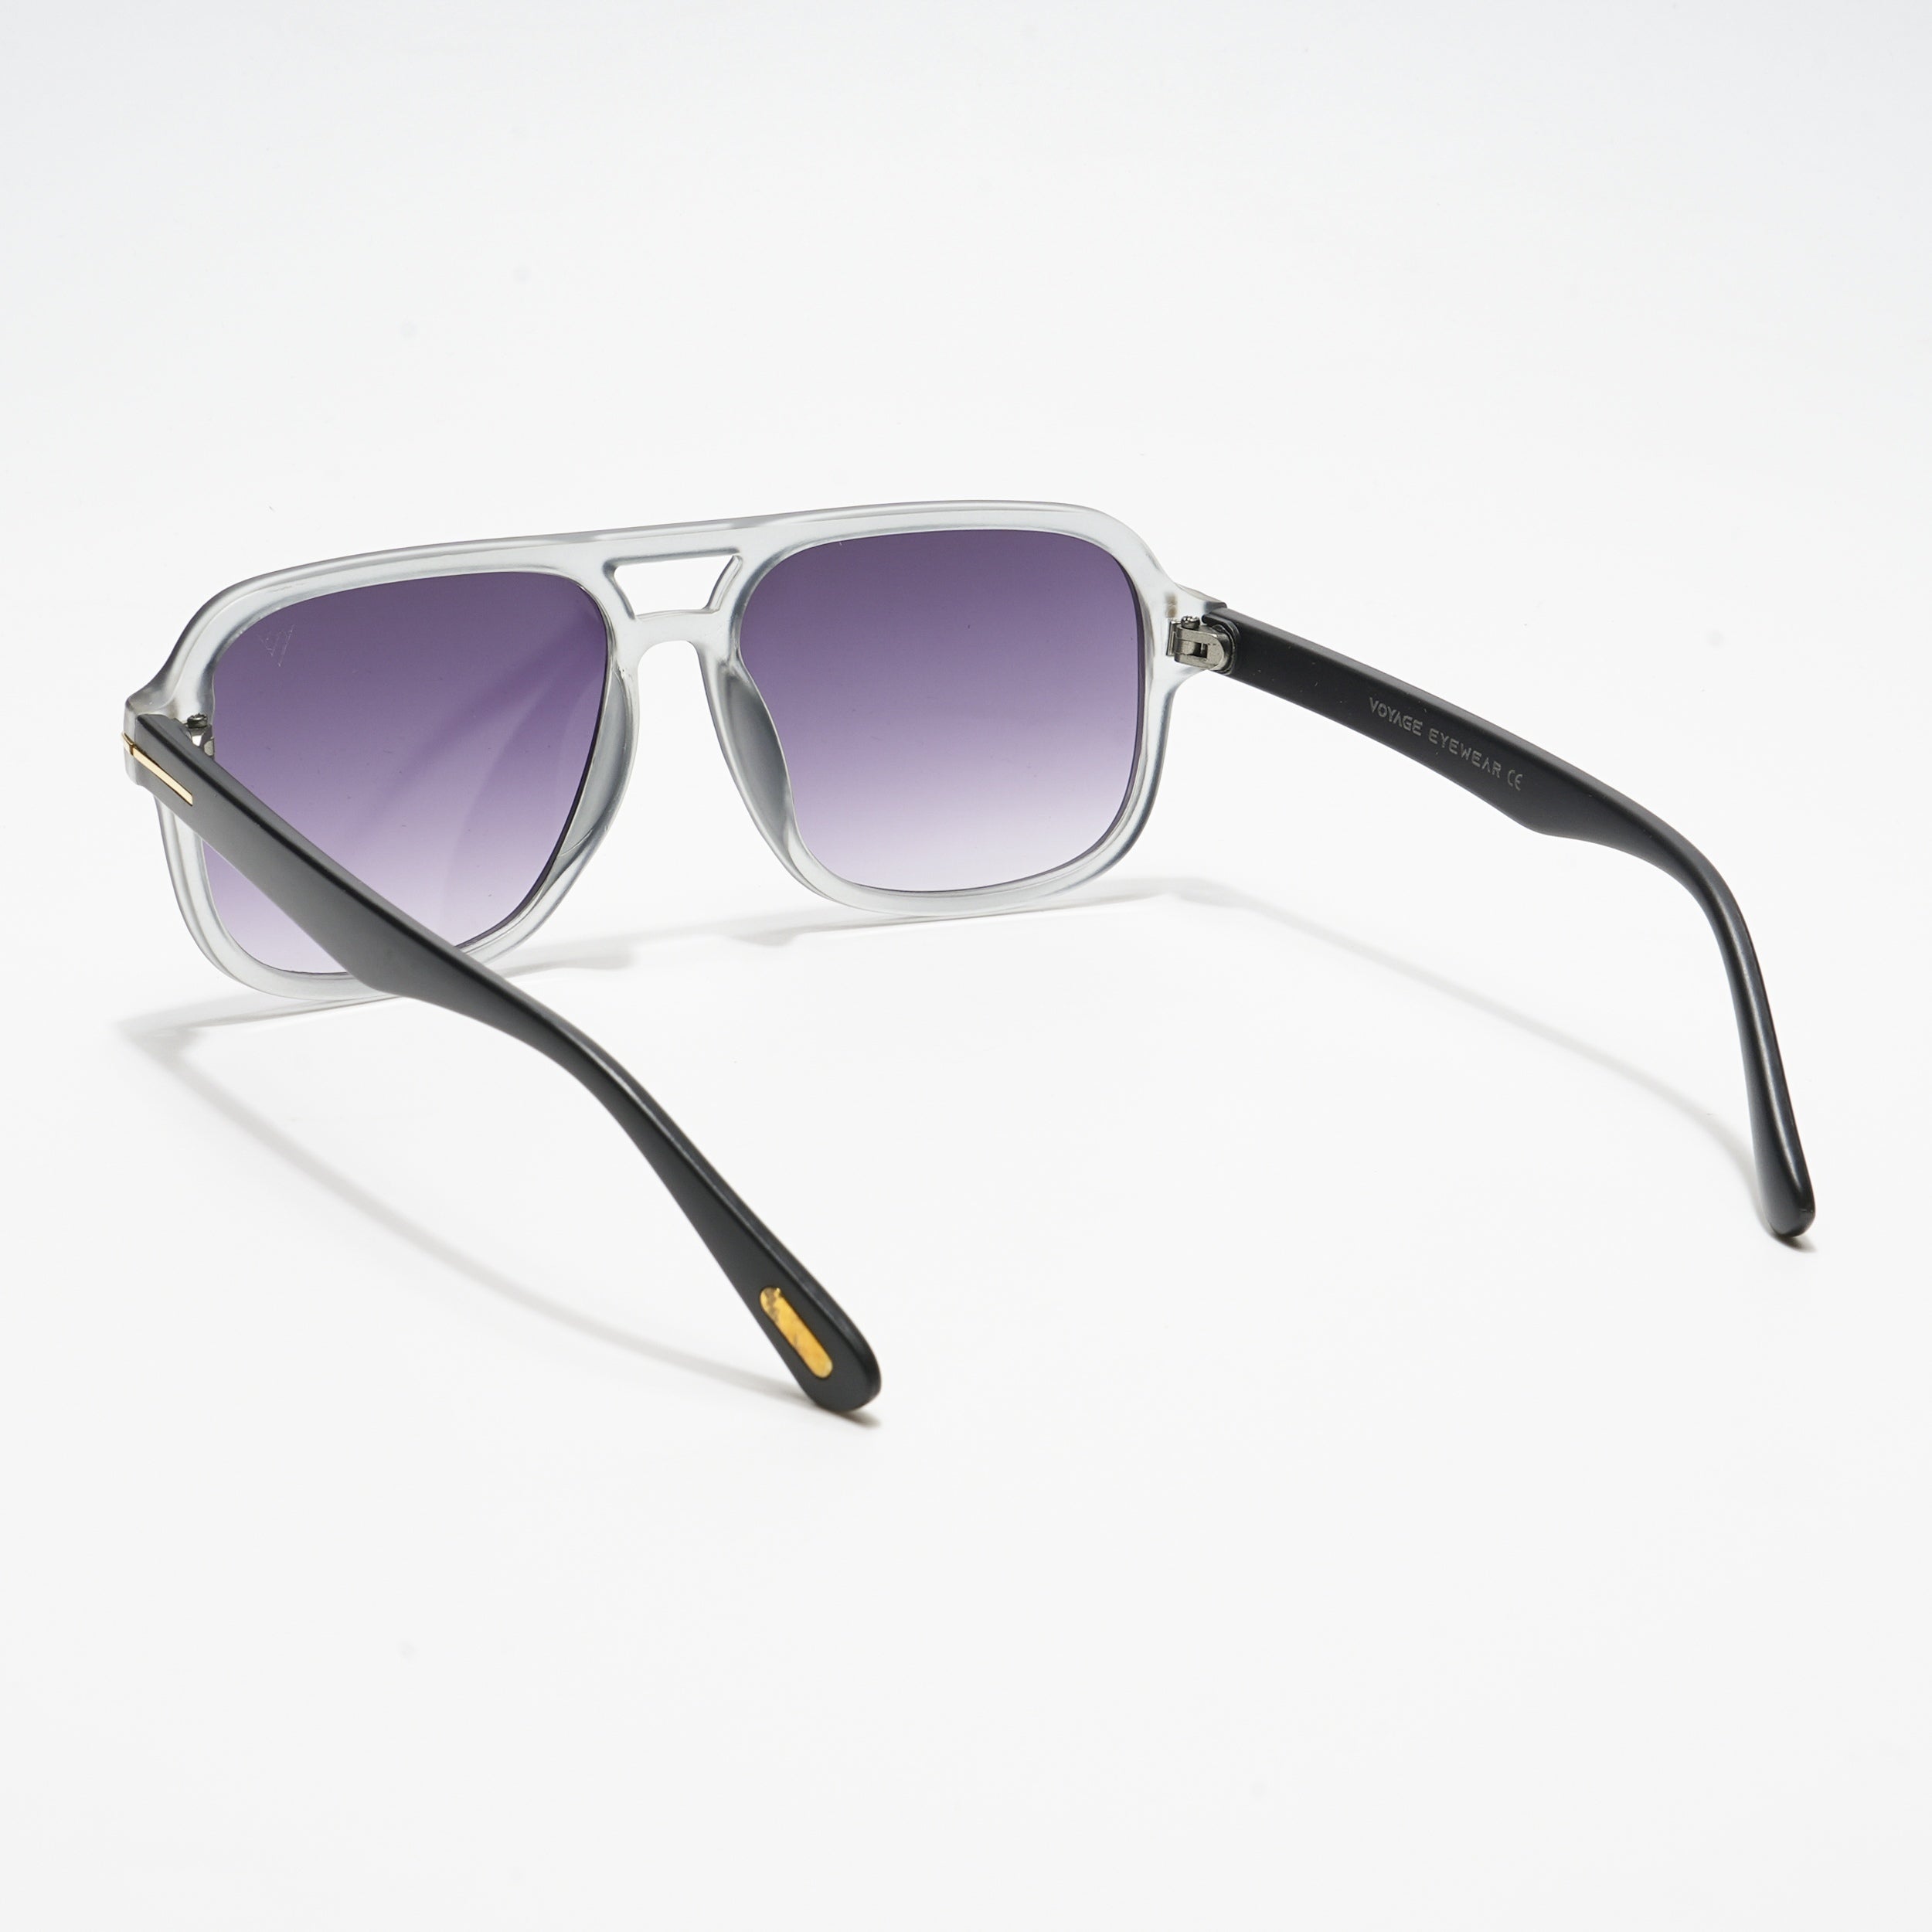 Voyage Grey Wayfarer Sunglasses - MG3940